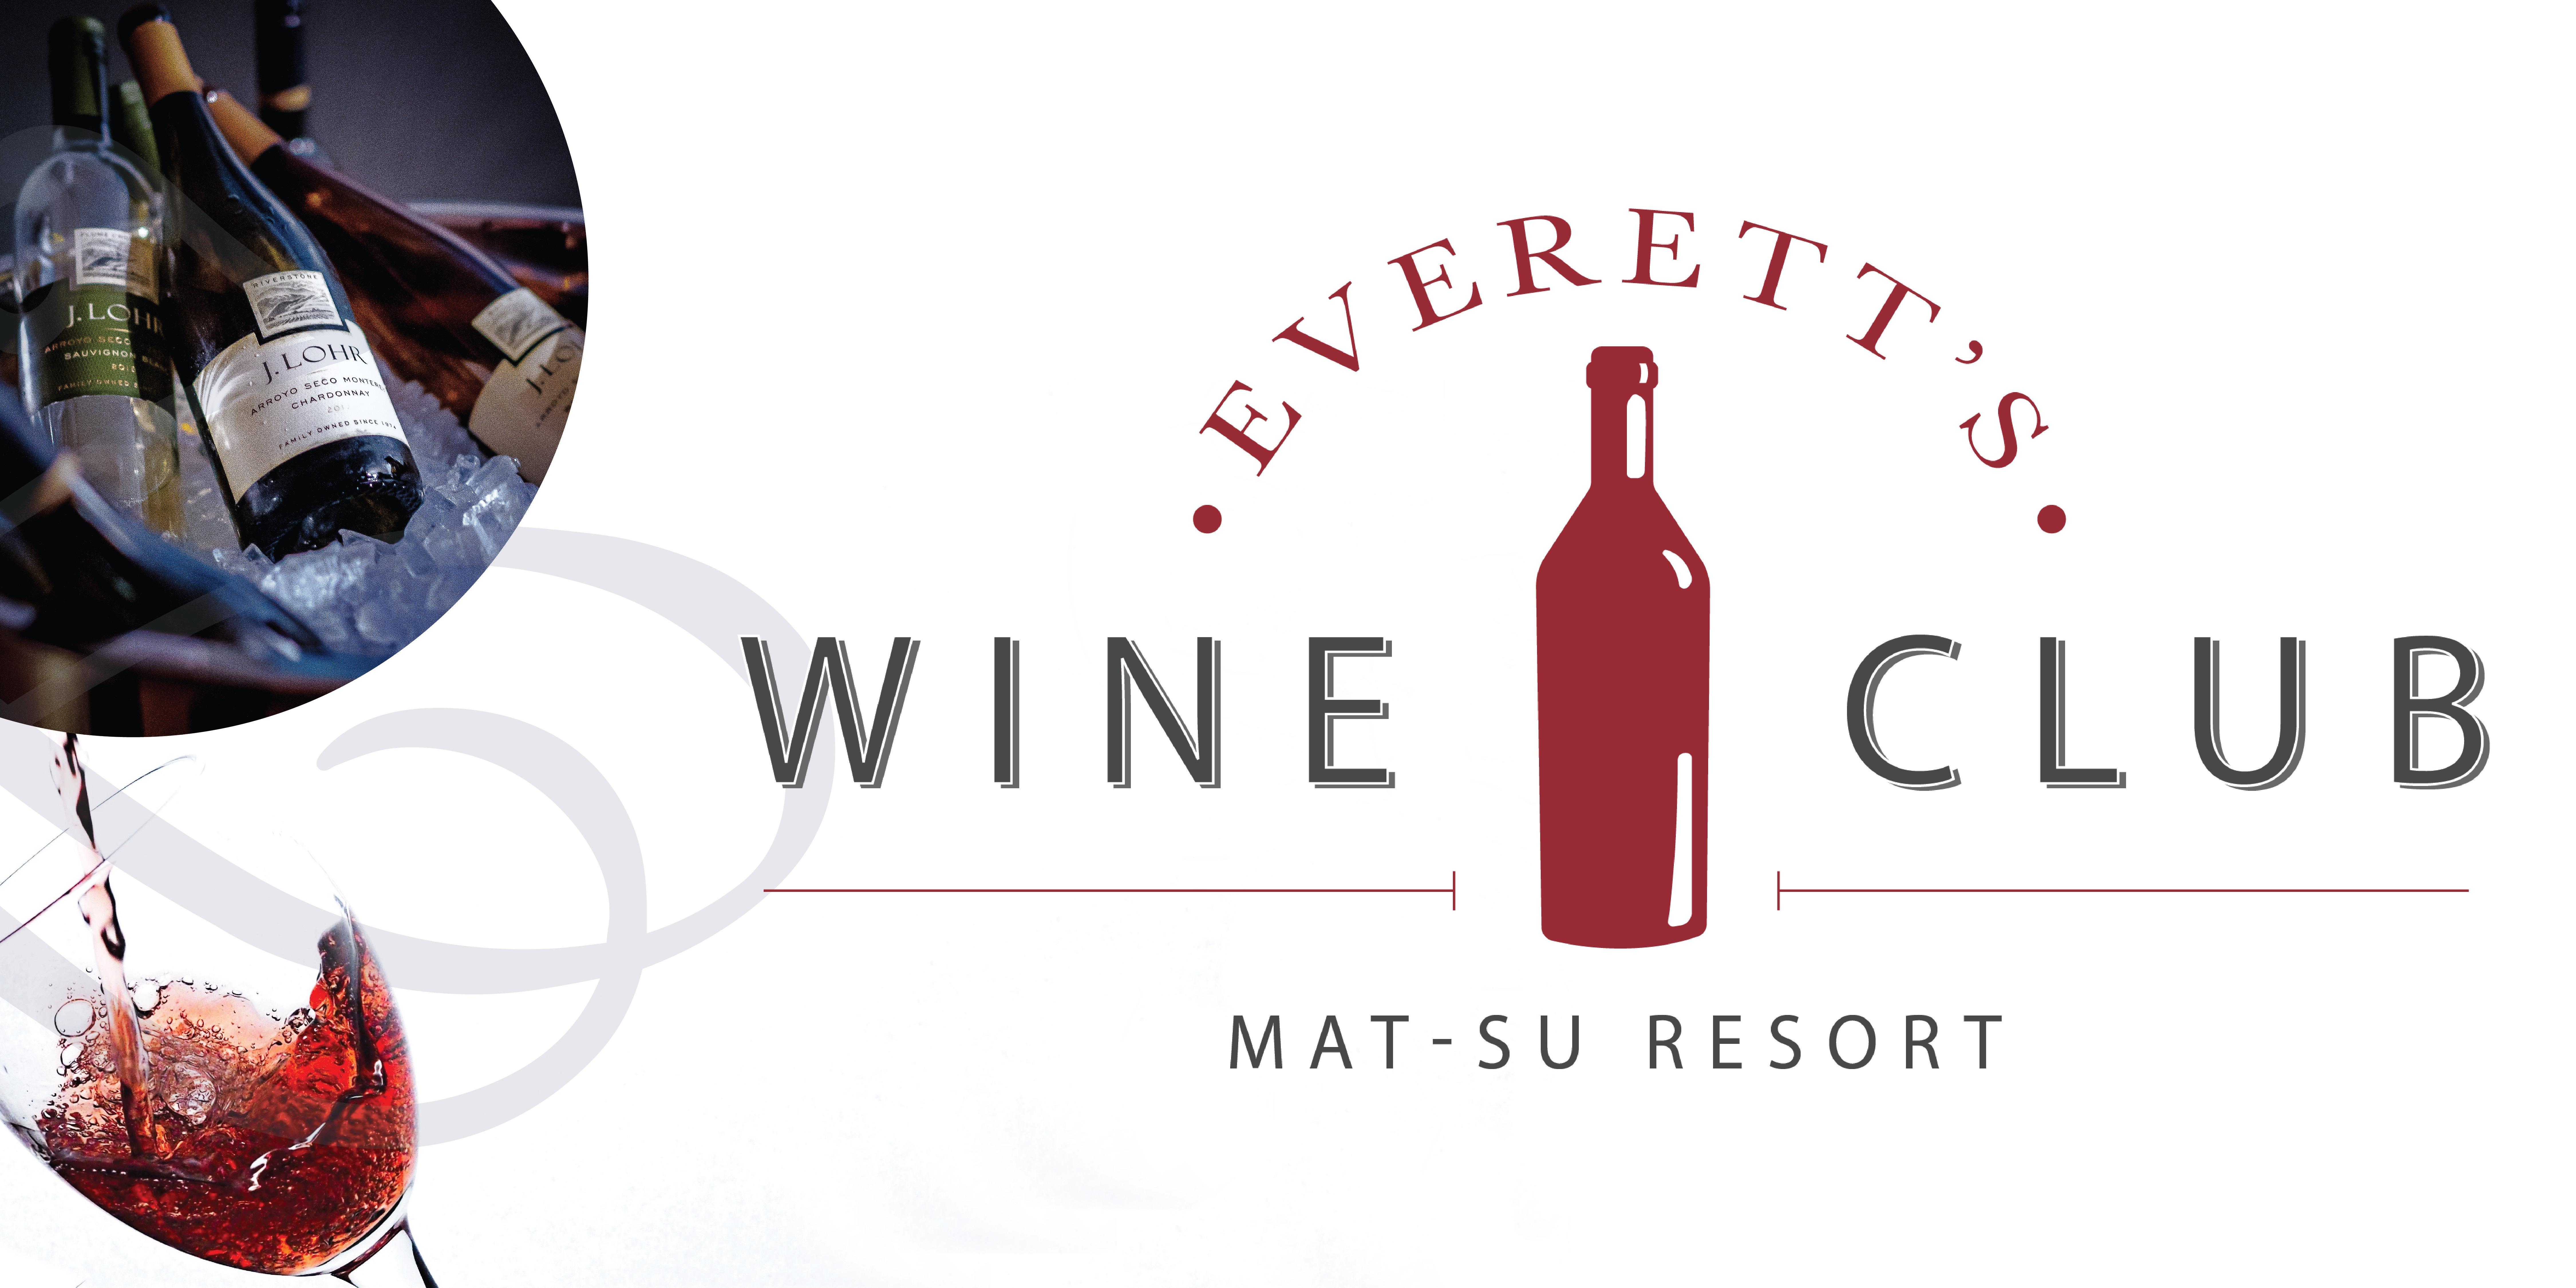 Everett's Wine Club